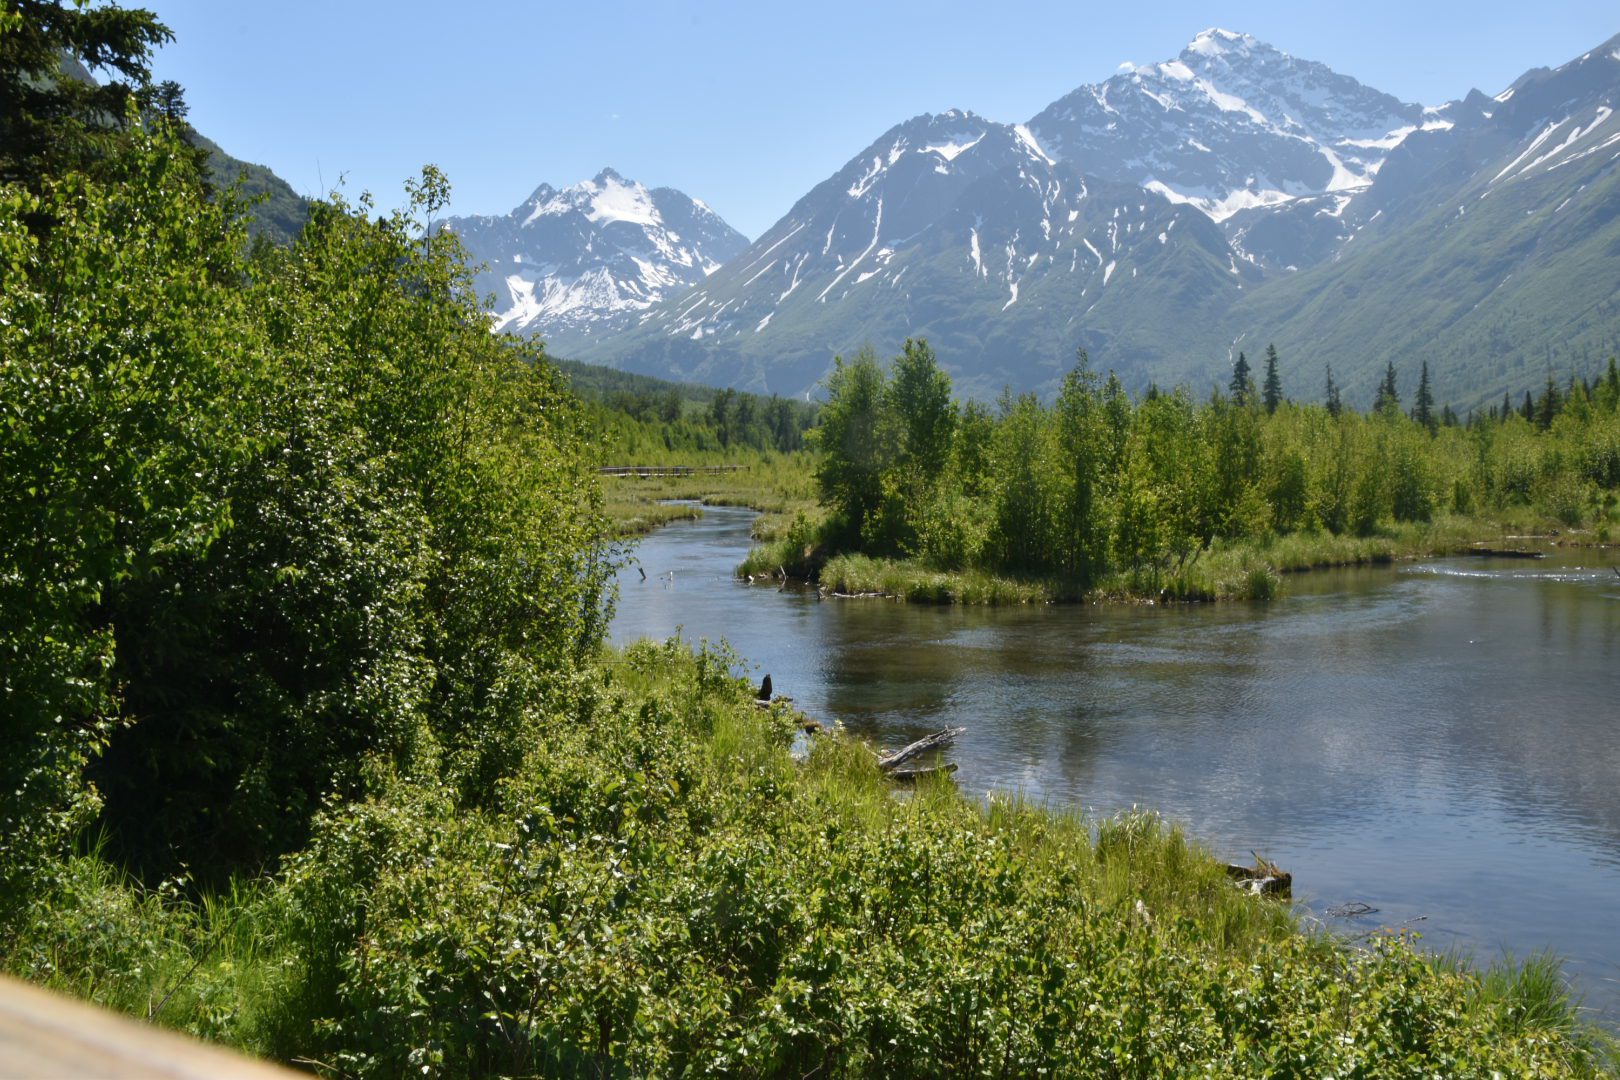 Plan an Alaska trip Eagle River Nature Center